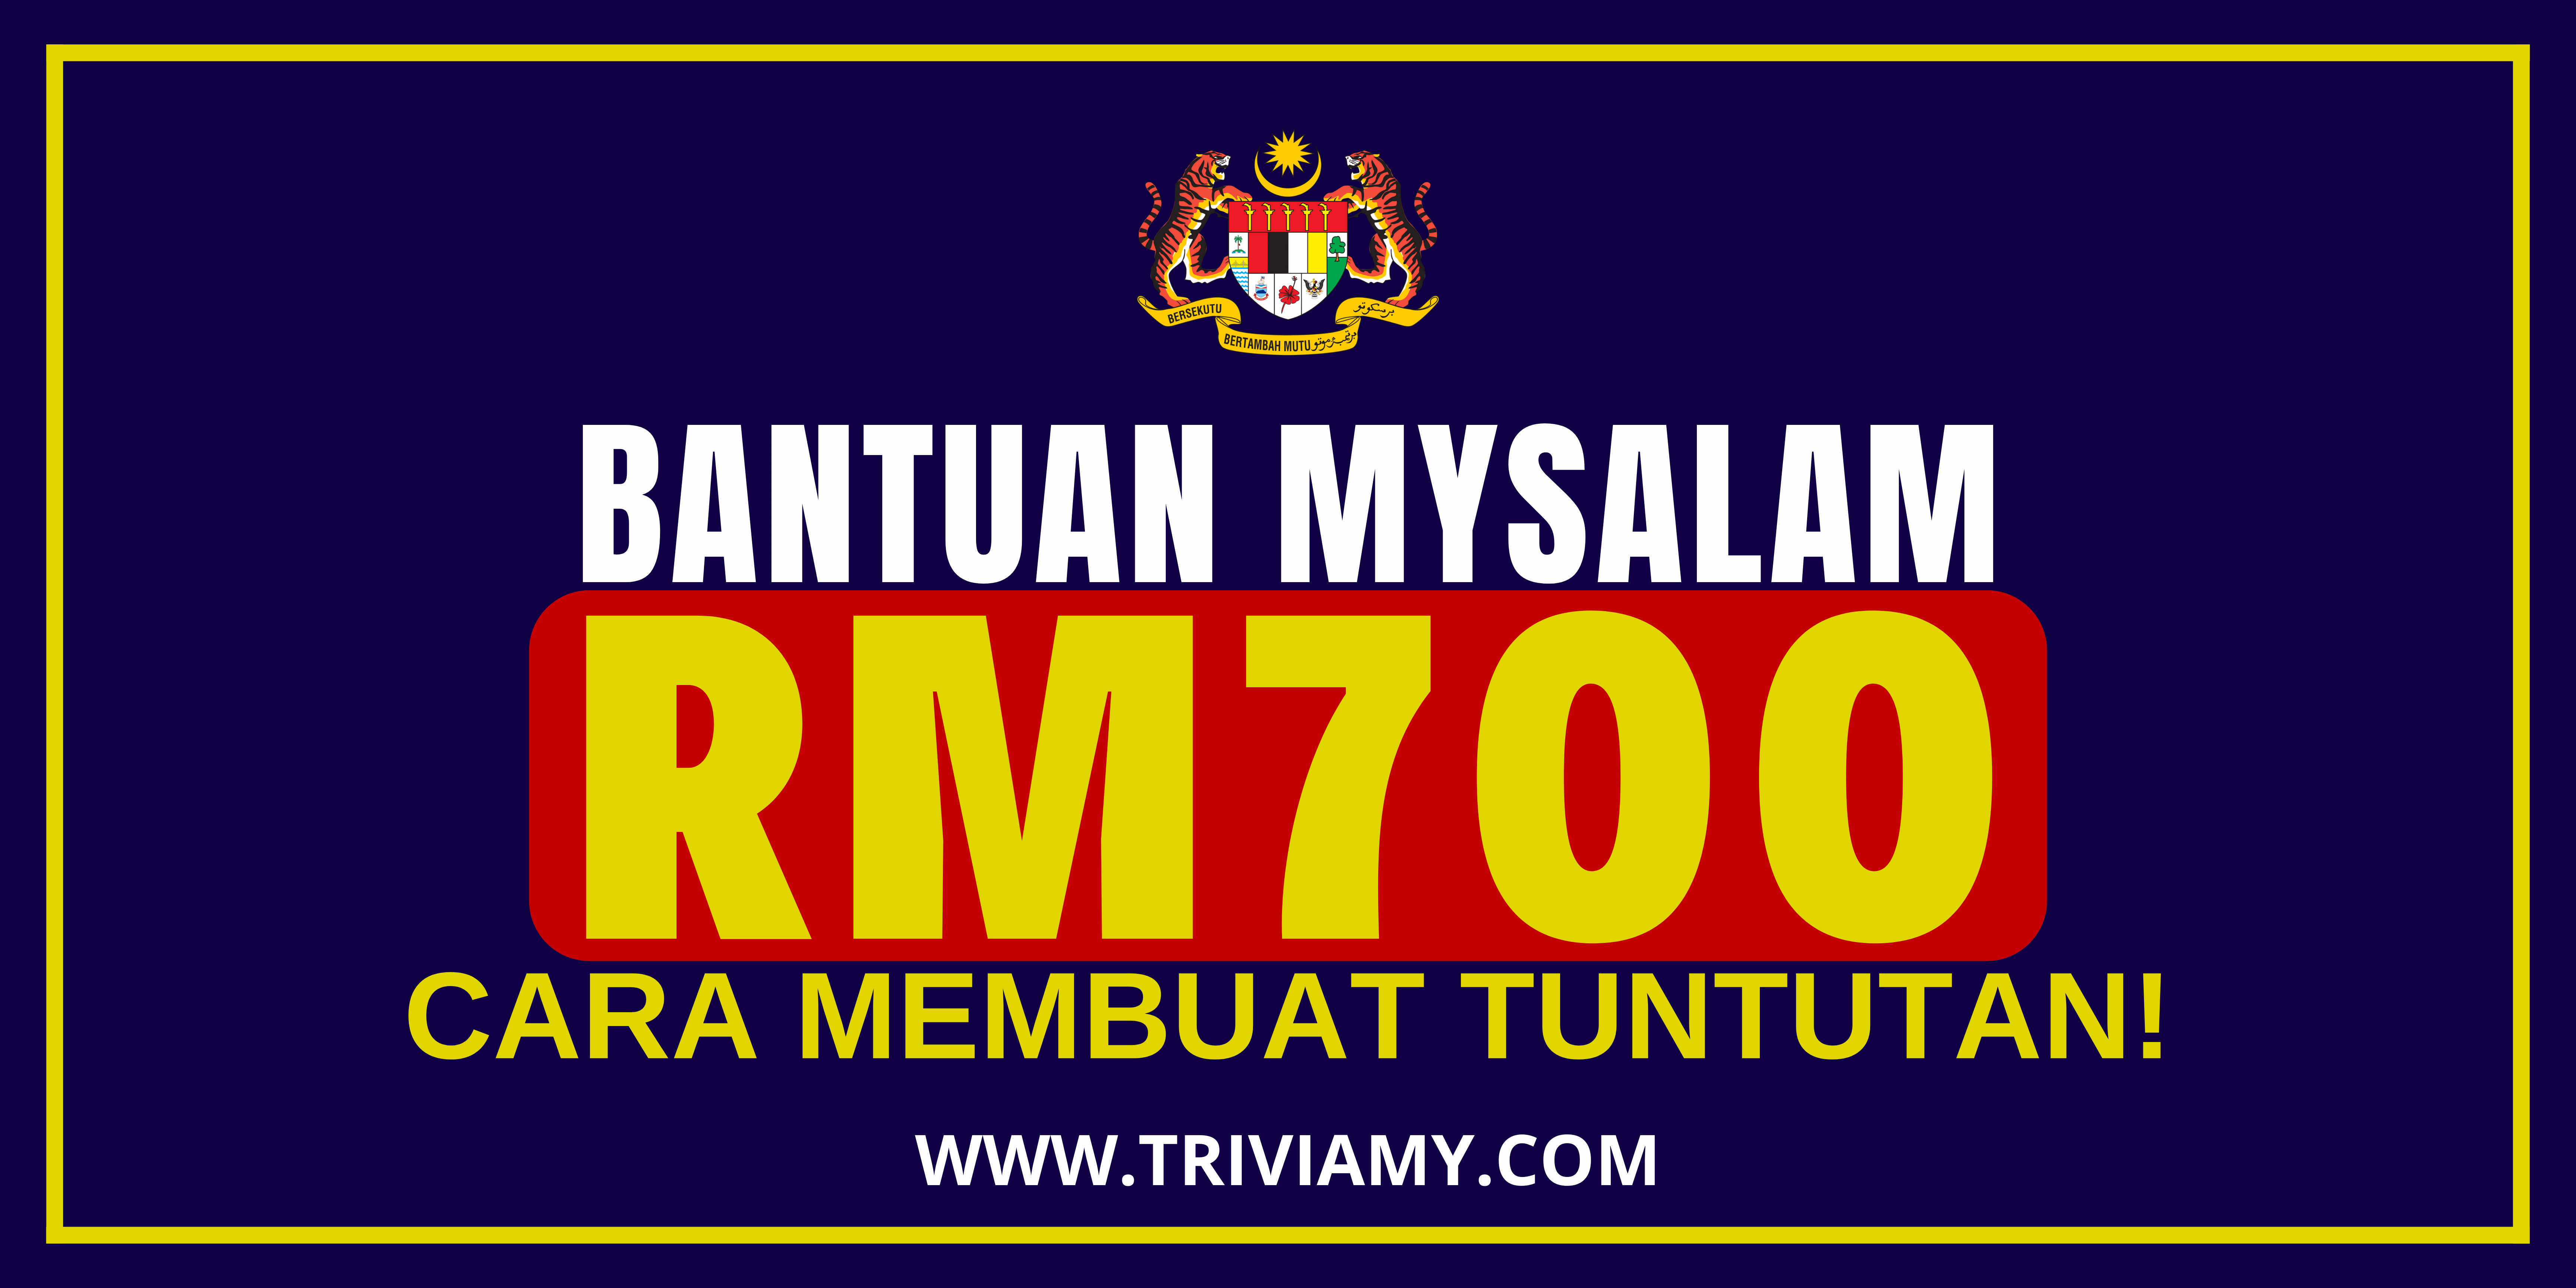 Bantuan MySalam RM700